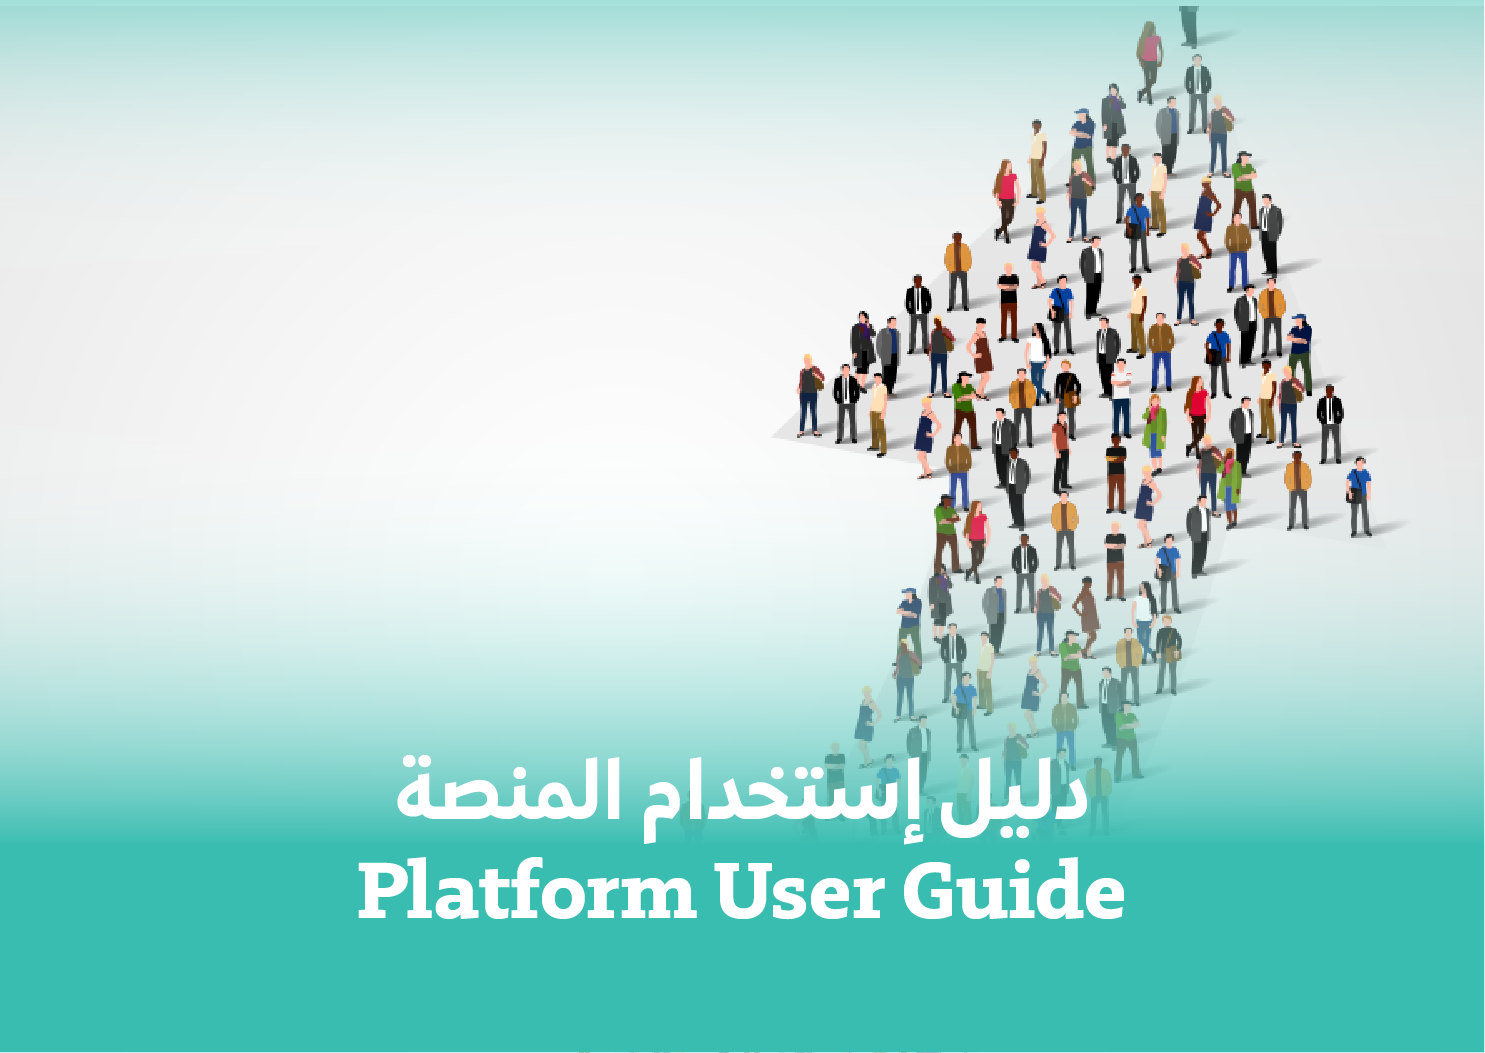 Taqarib's E-learning Platform User Guide